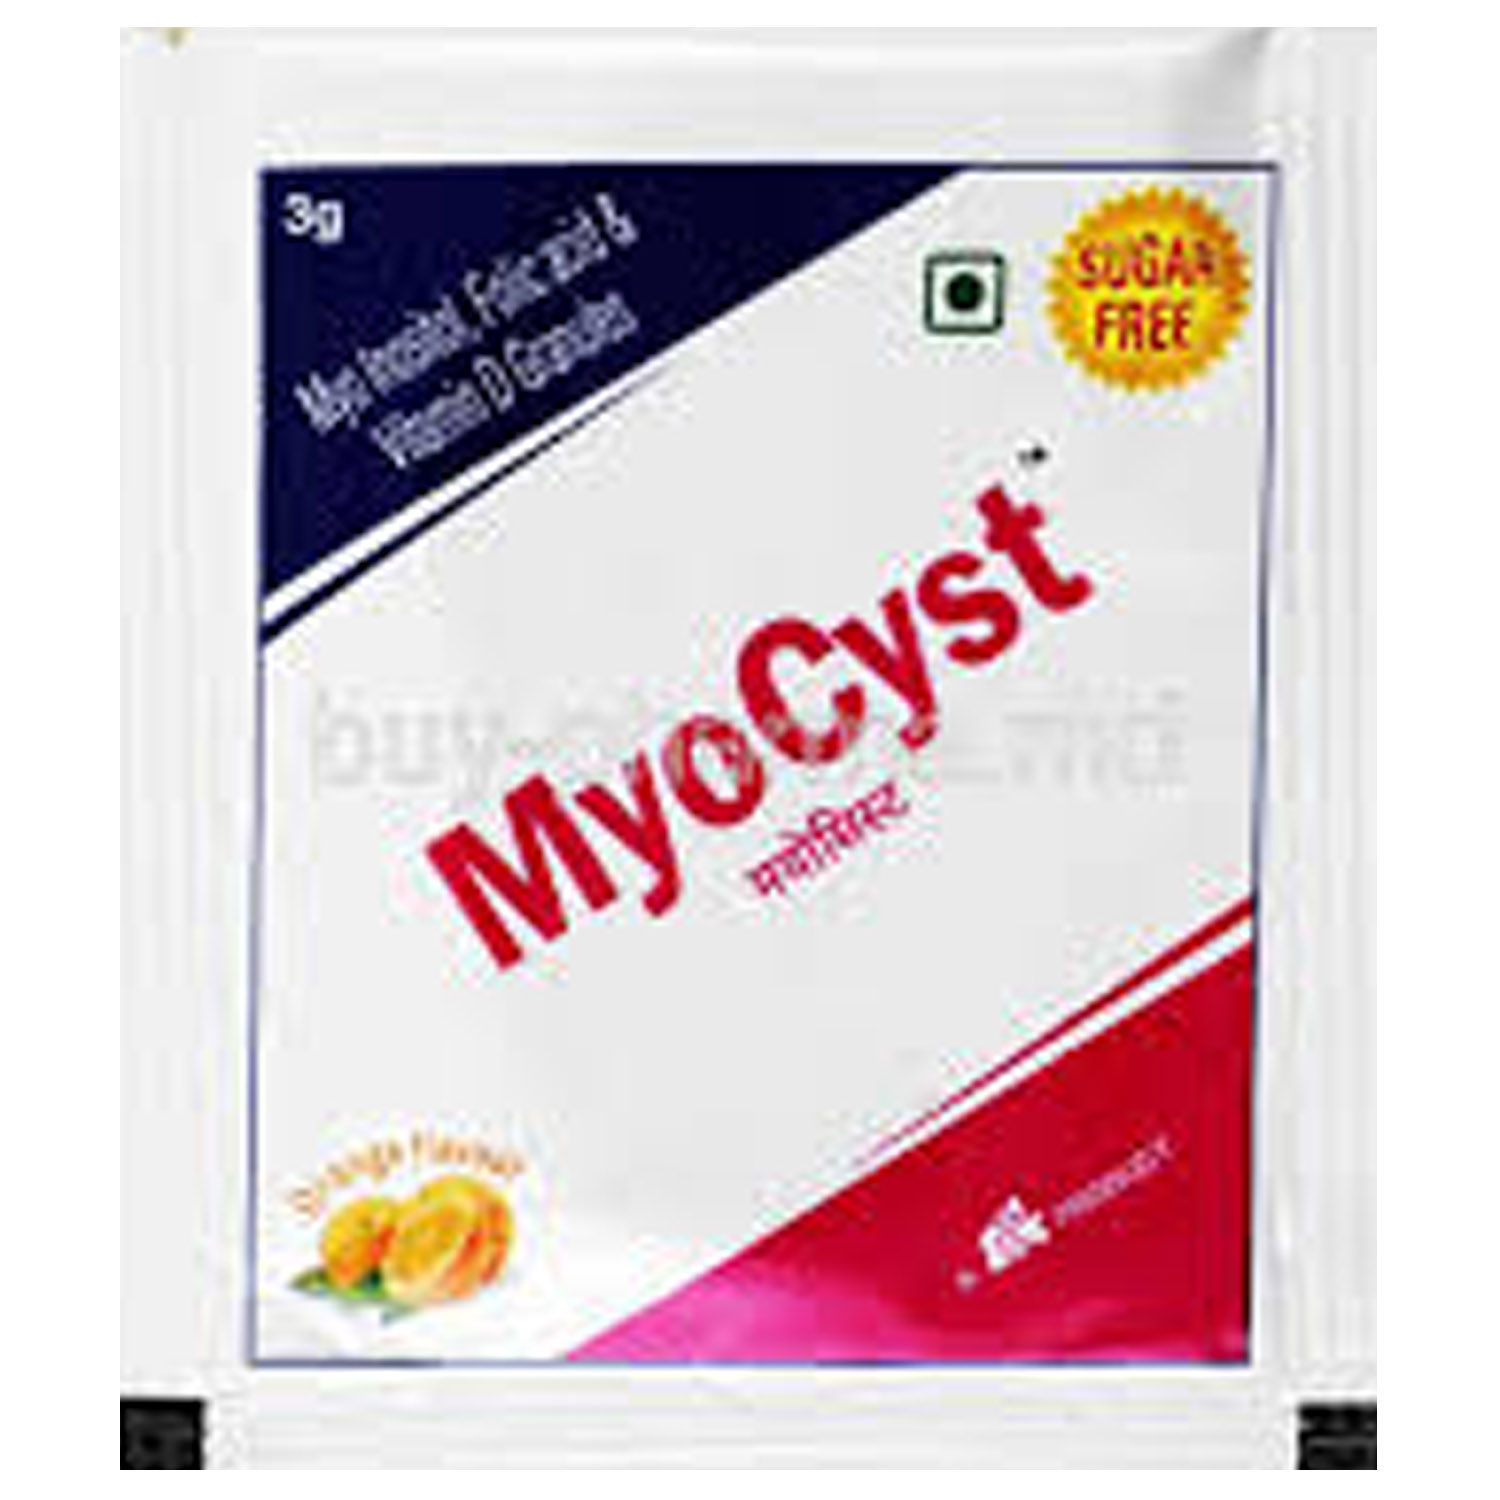 Buy Myocyst Orange Flavour Sugar Free Sachet, 3 gm Online